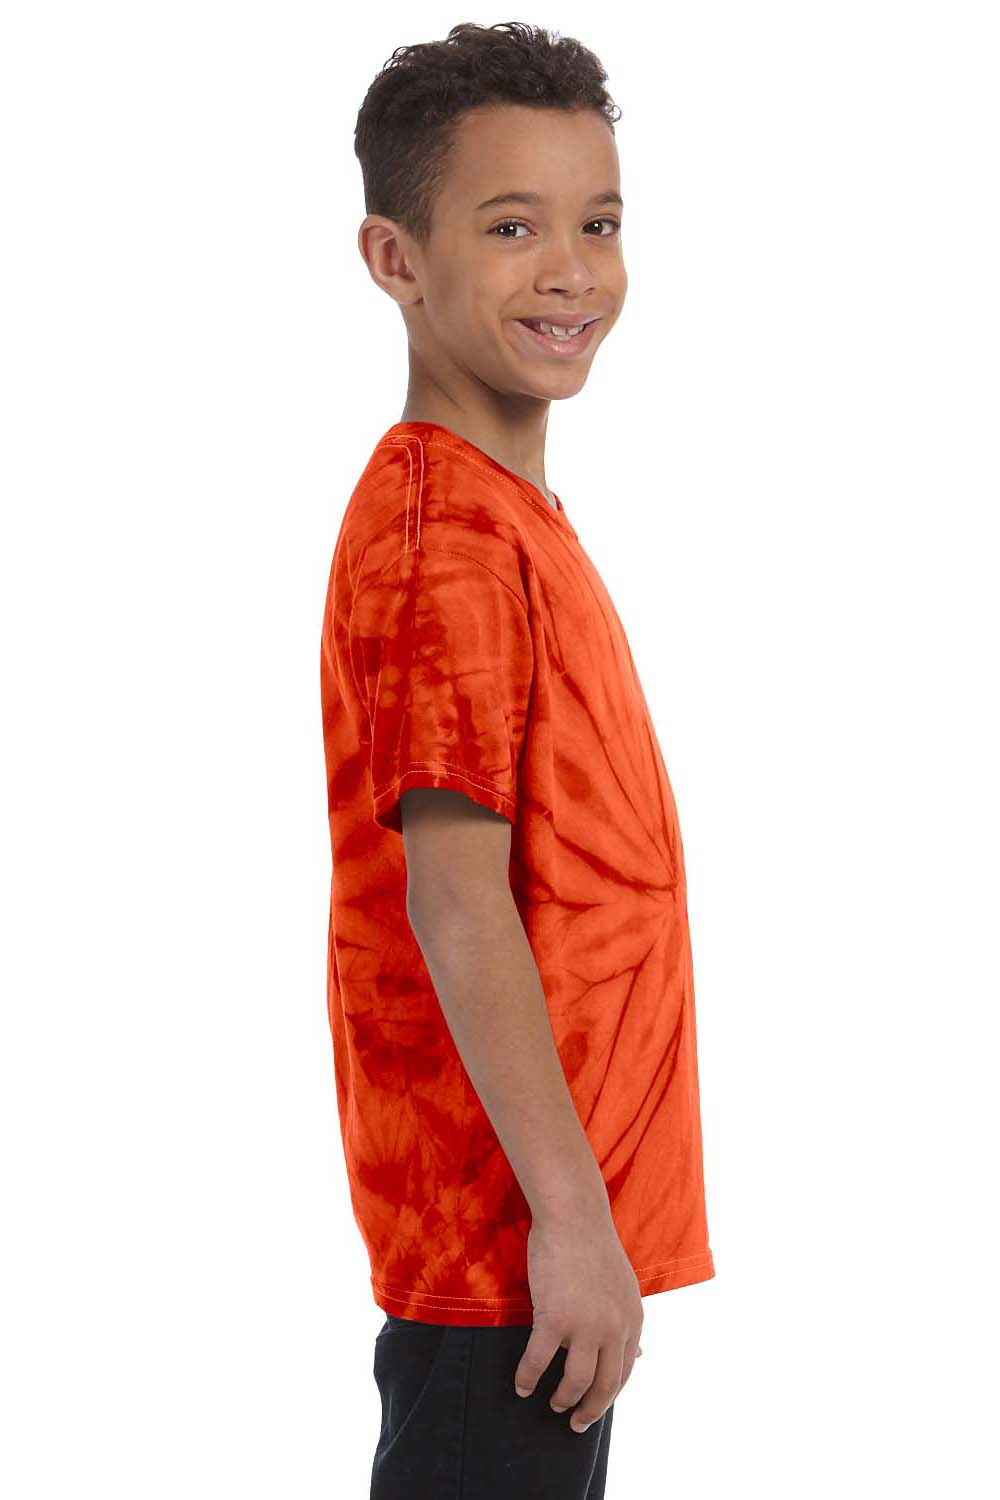 Tie-Dye CD101Y Youth Short Sleeve Crewneck T-Shirt Orange Side